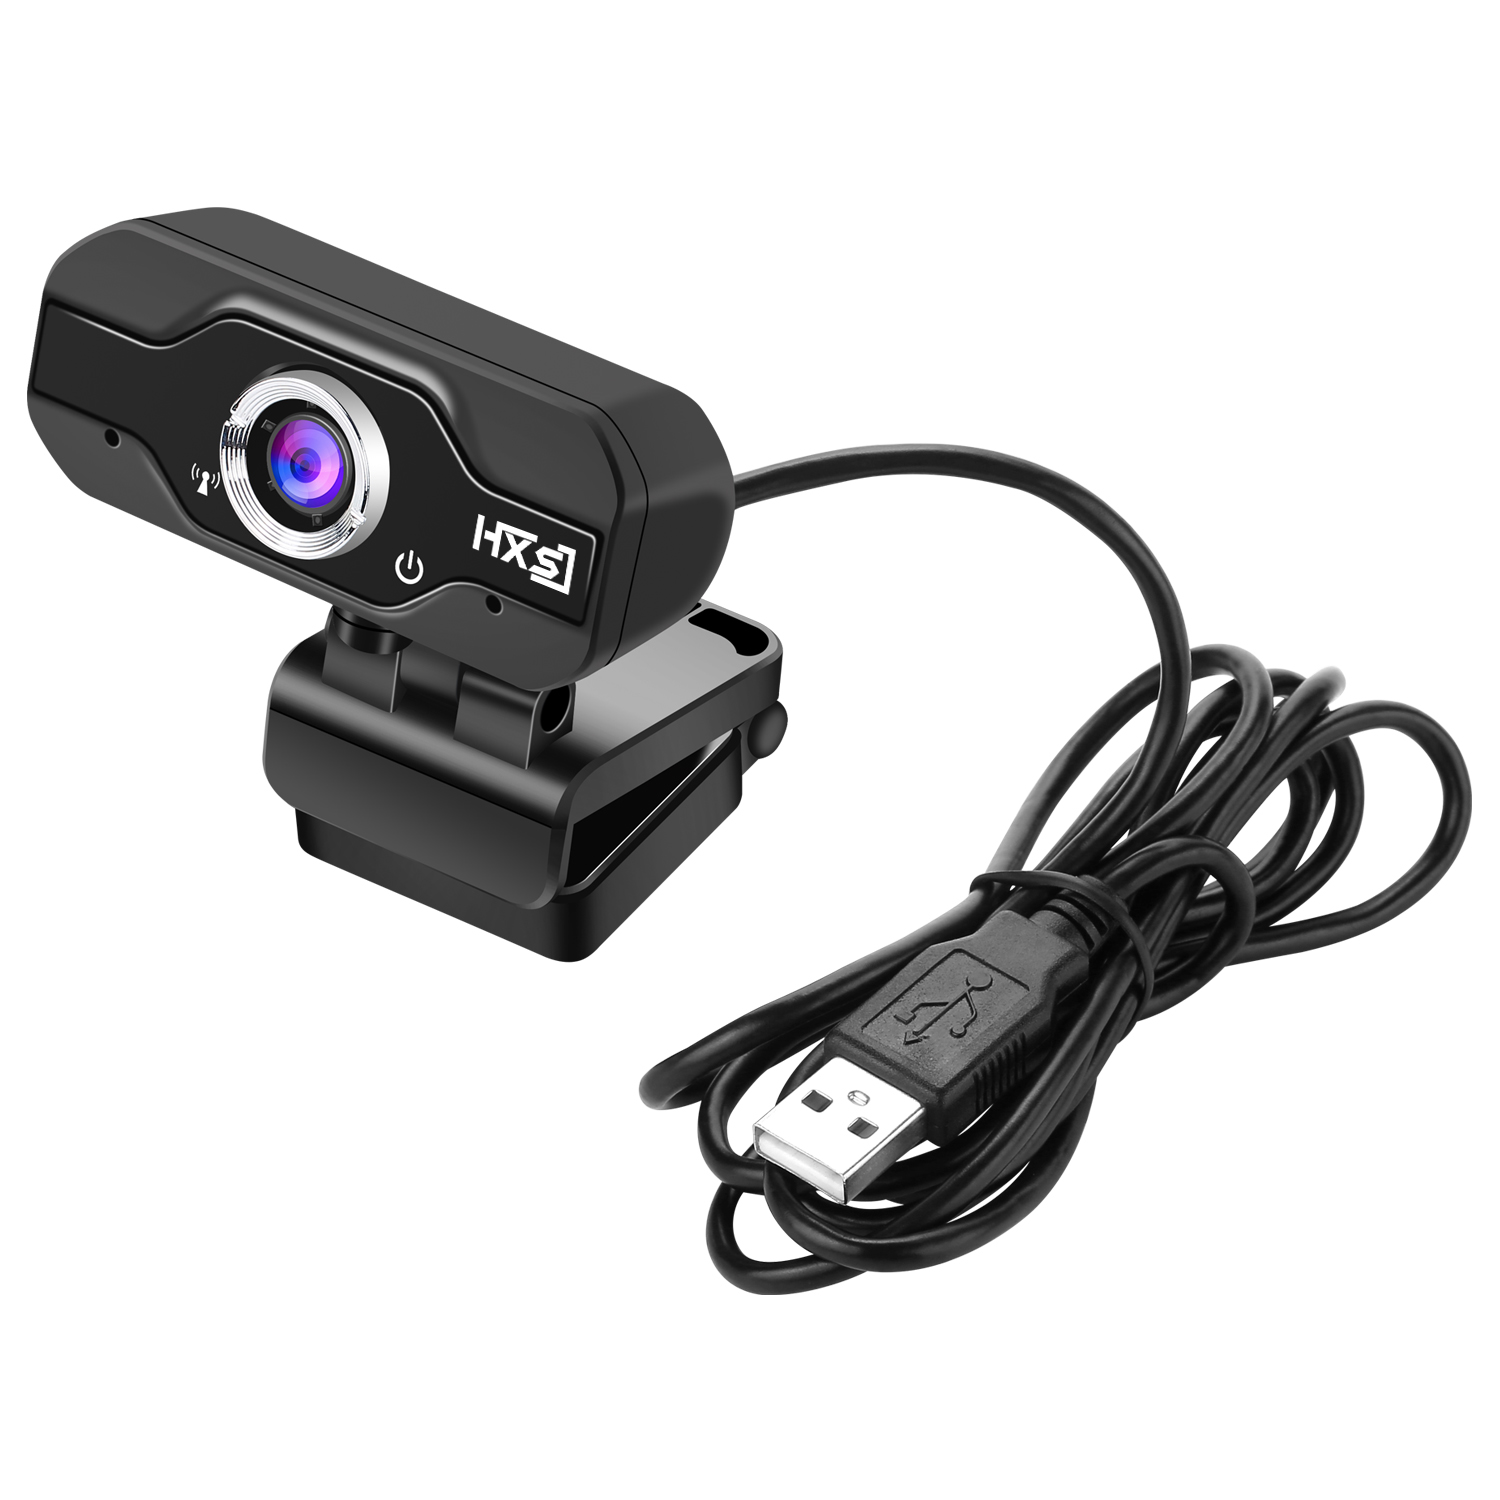 HXSJ HD 720P CMOS Sensor Webcam Built-in Microphone Adjustable Angle for Laptop Desktop 56